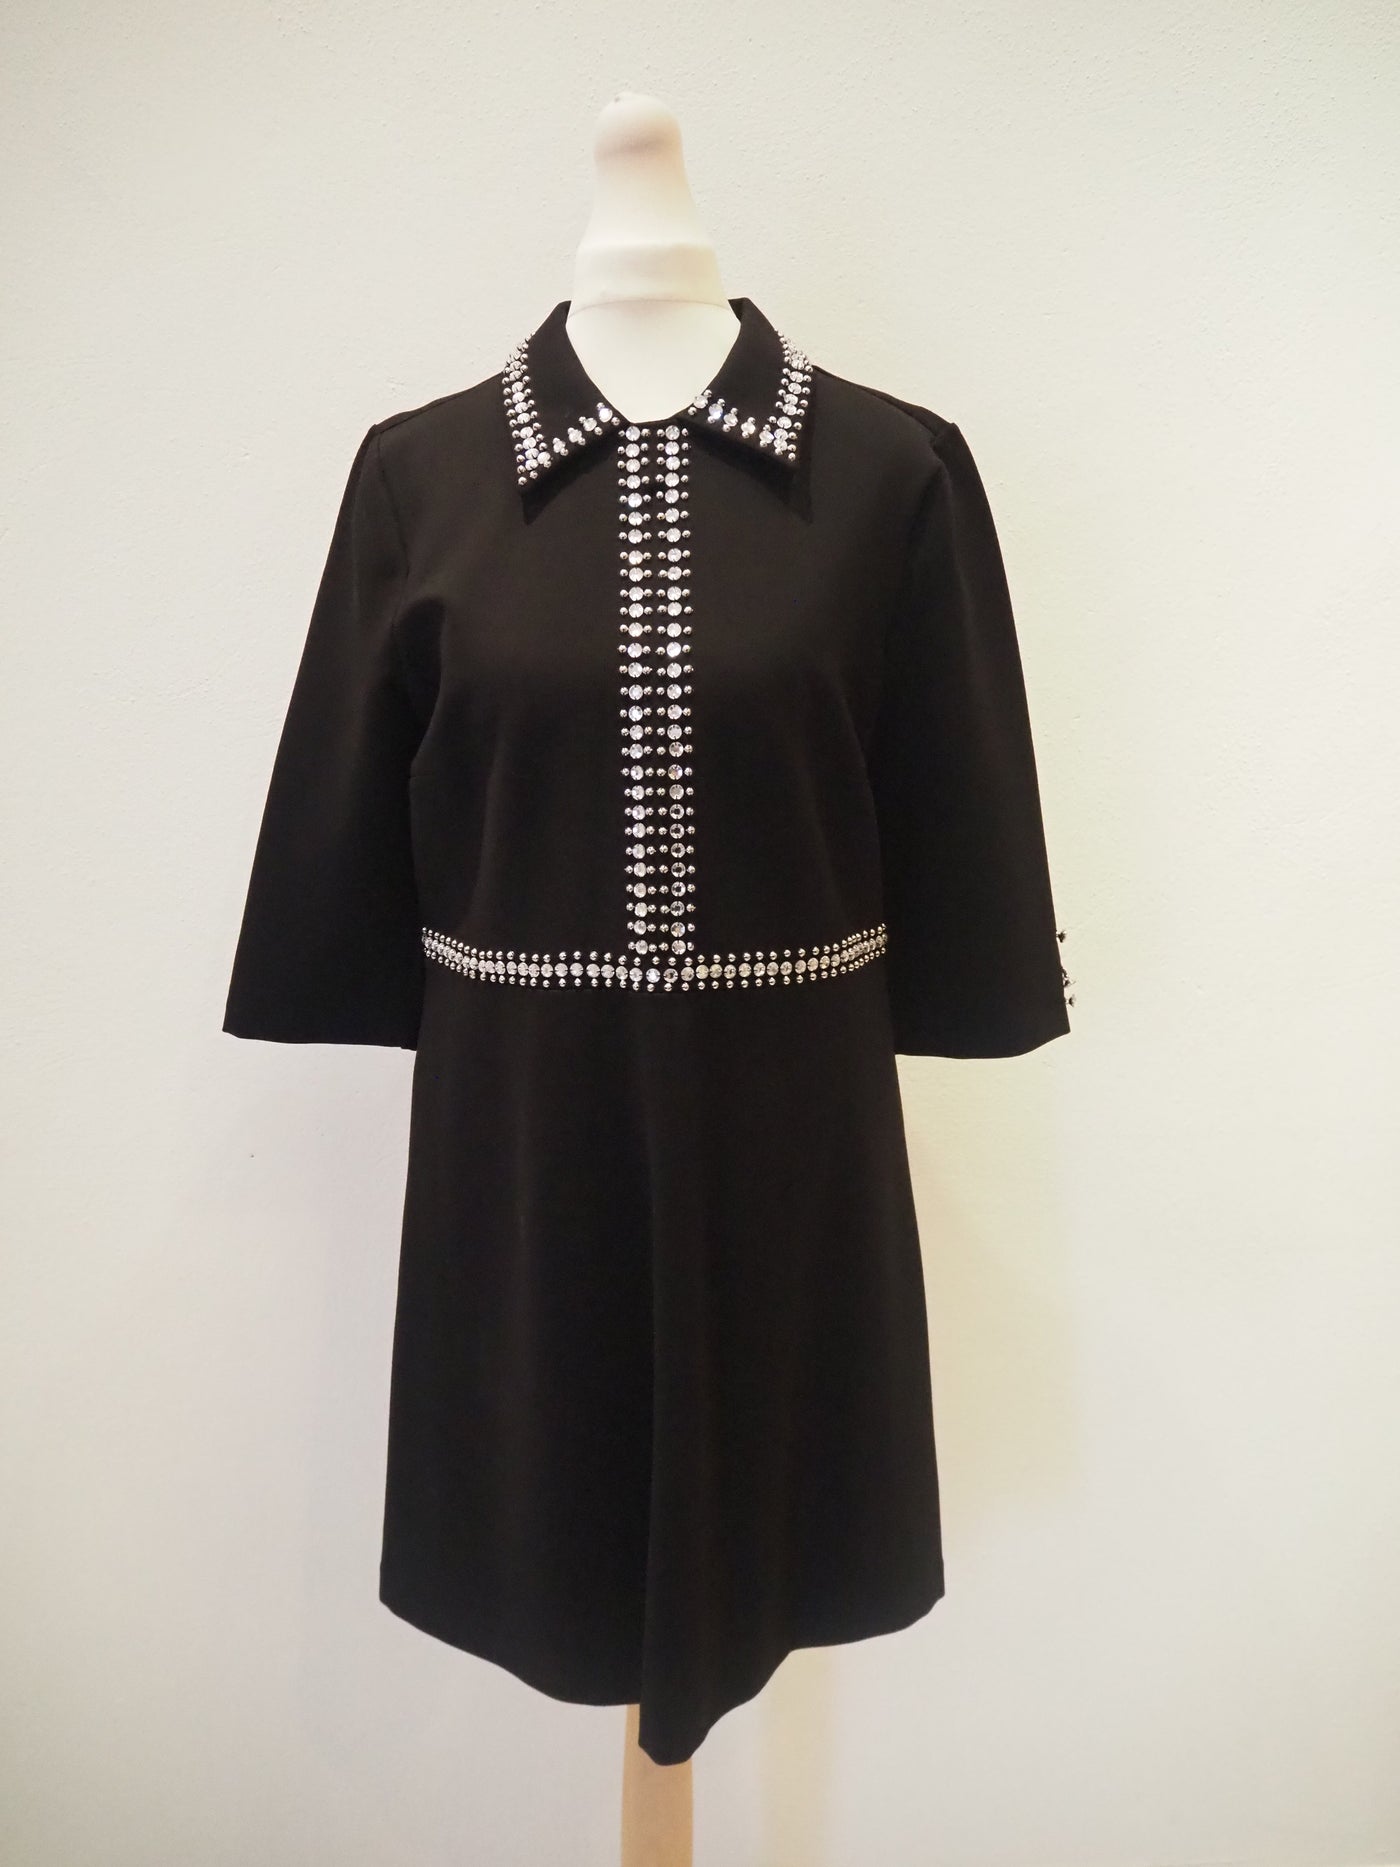 Savida Black Diamond Shift Dress Size 10